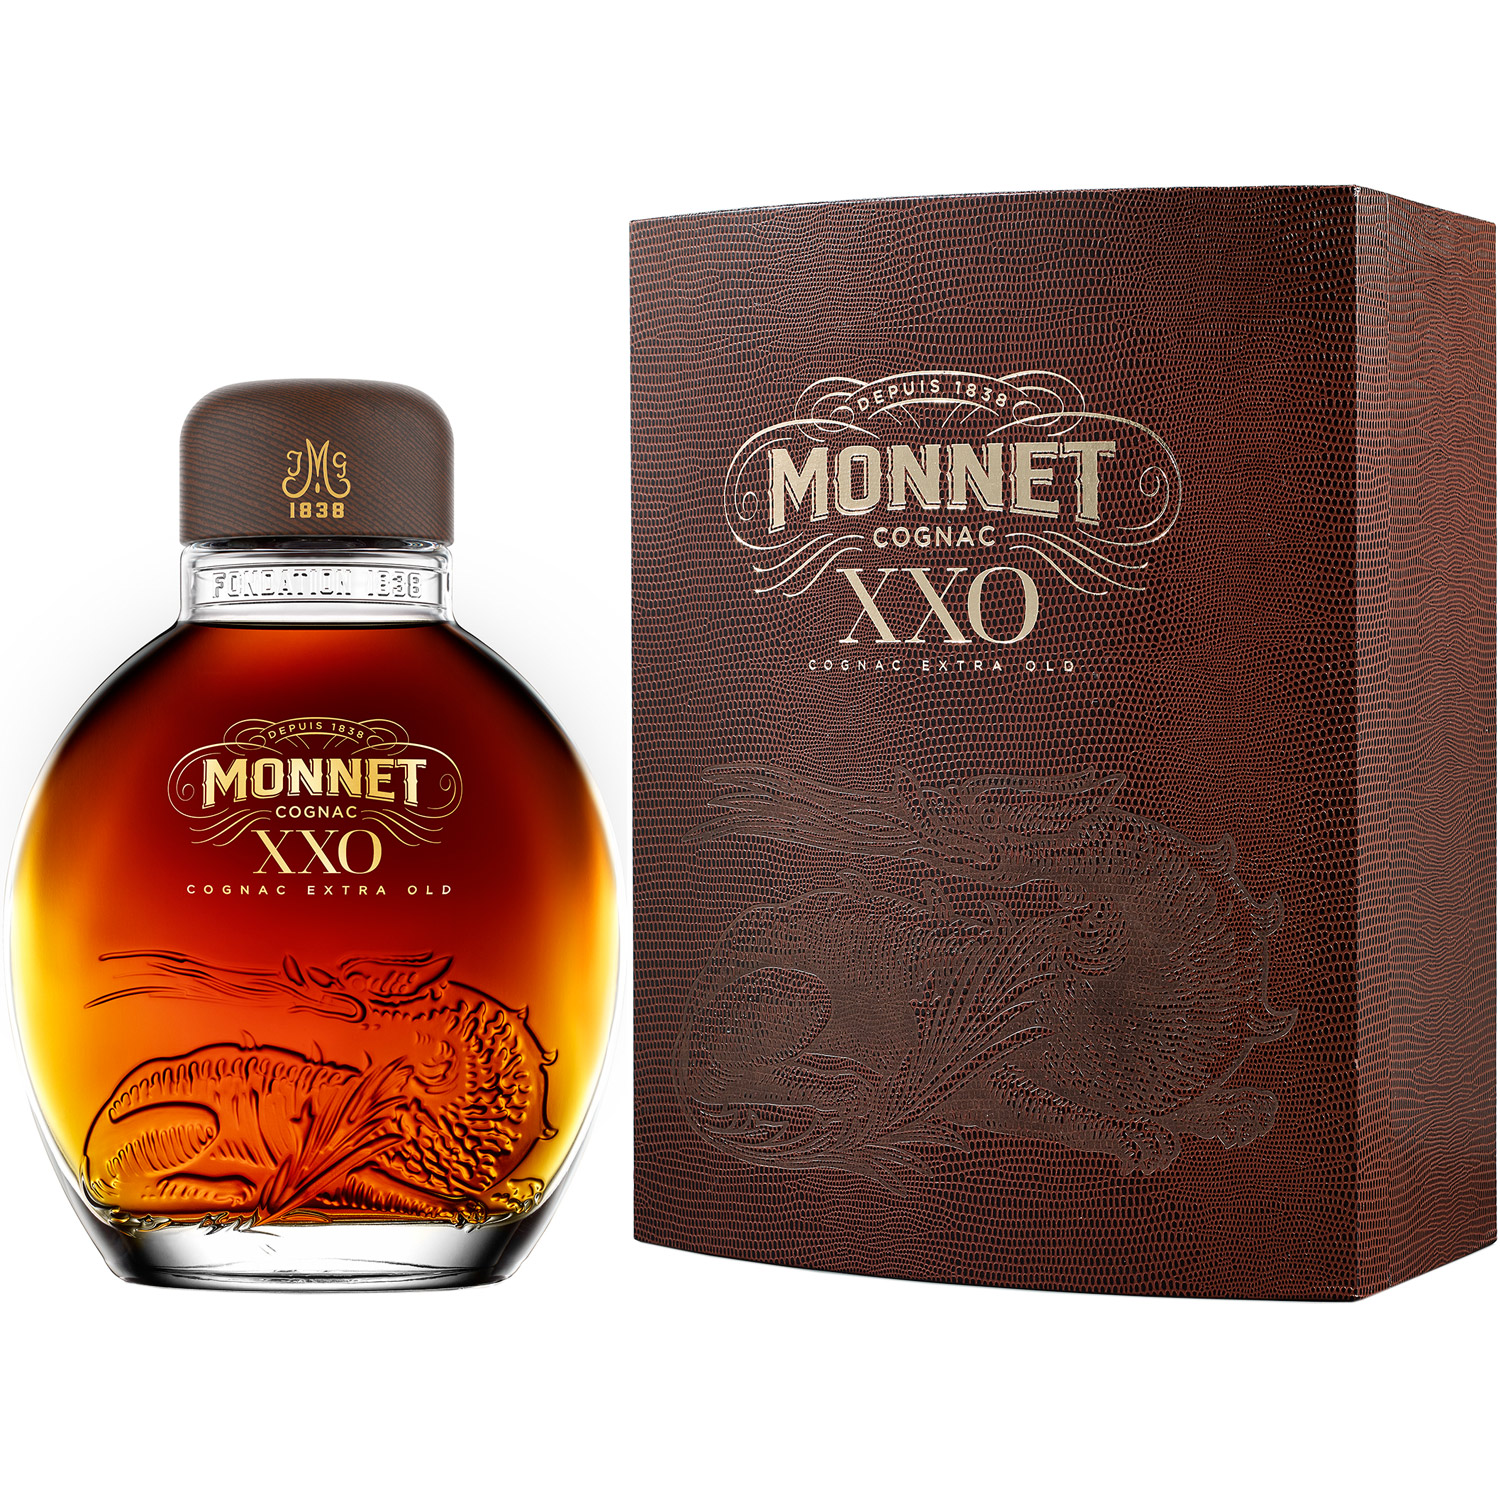 Monnet Cognac XXO